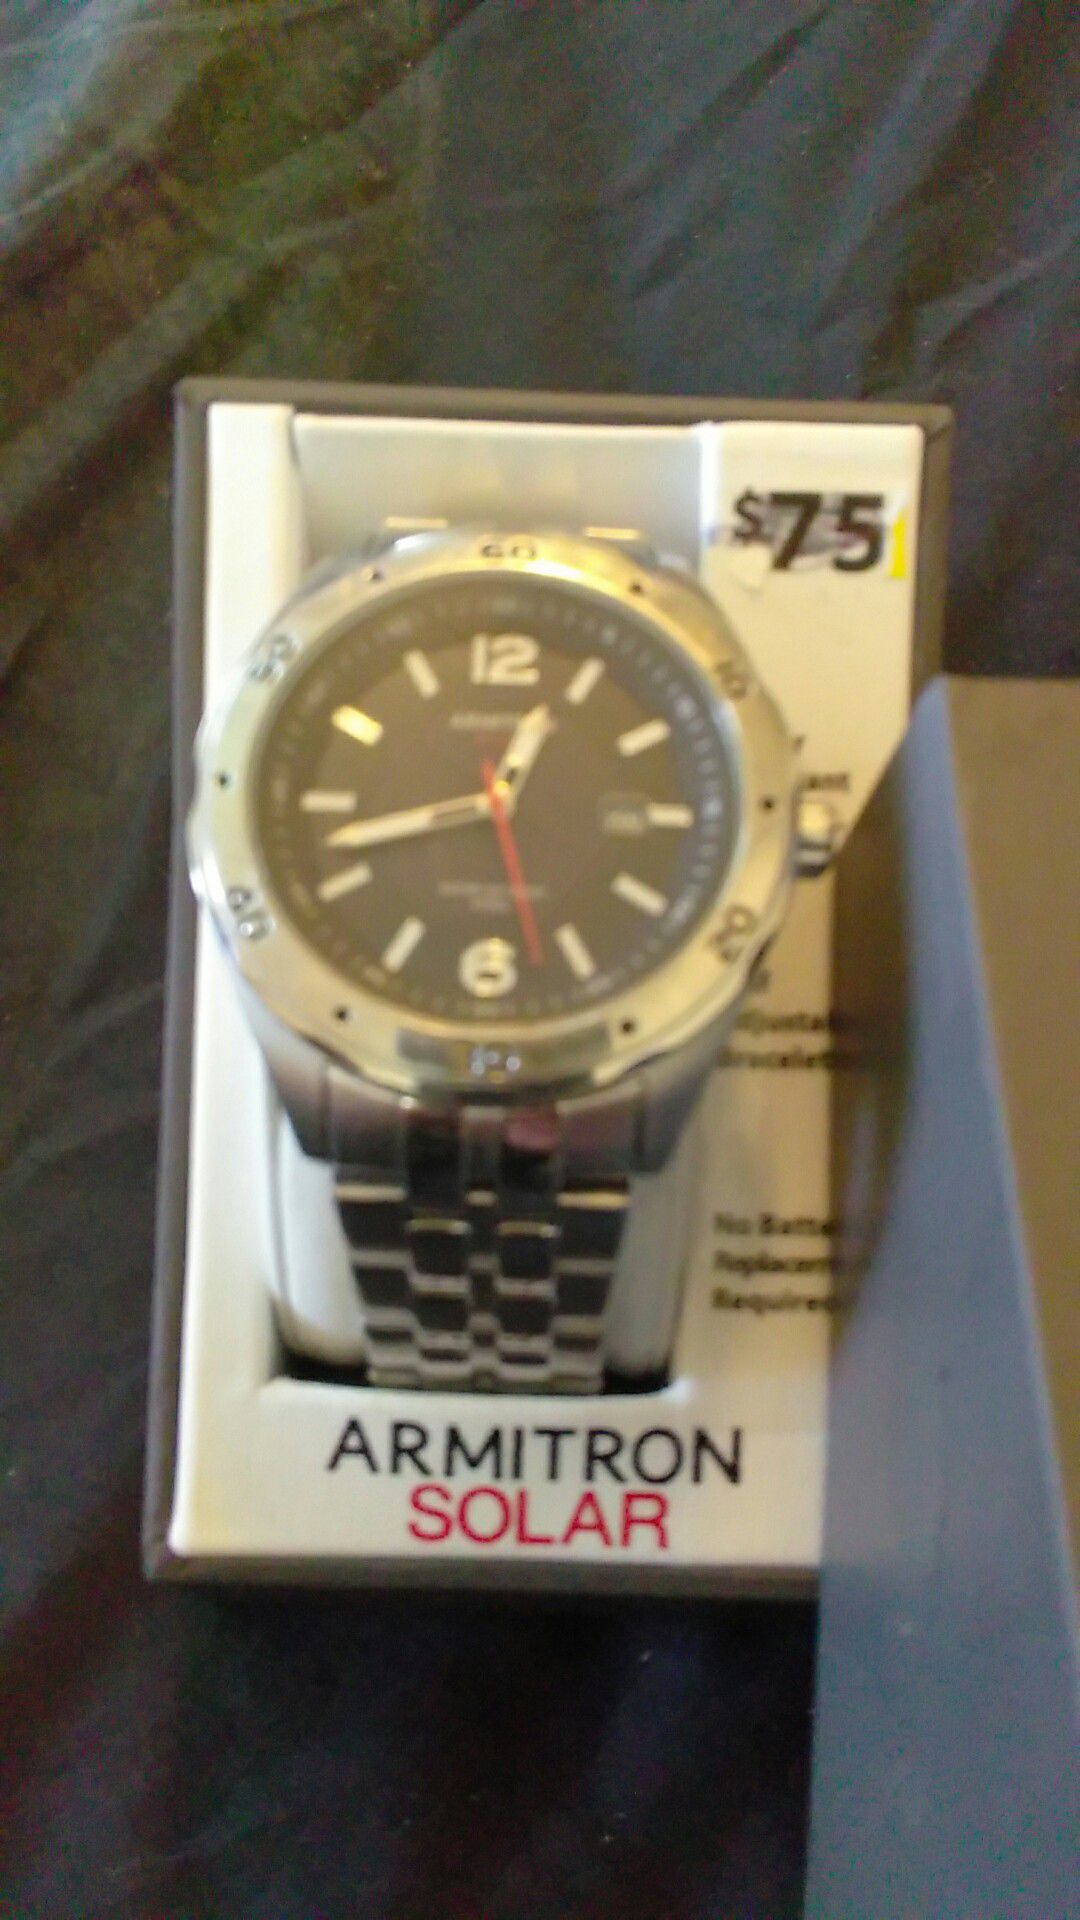 Armitron solar powered watch numbers glow in the dark